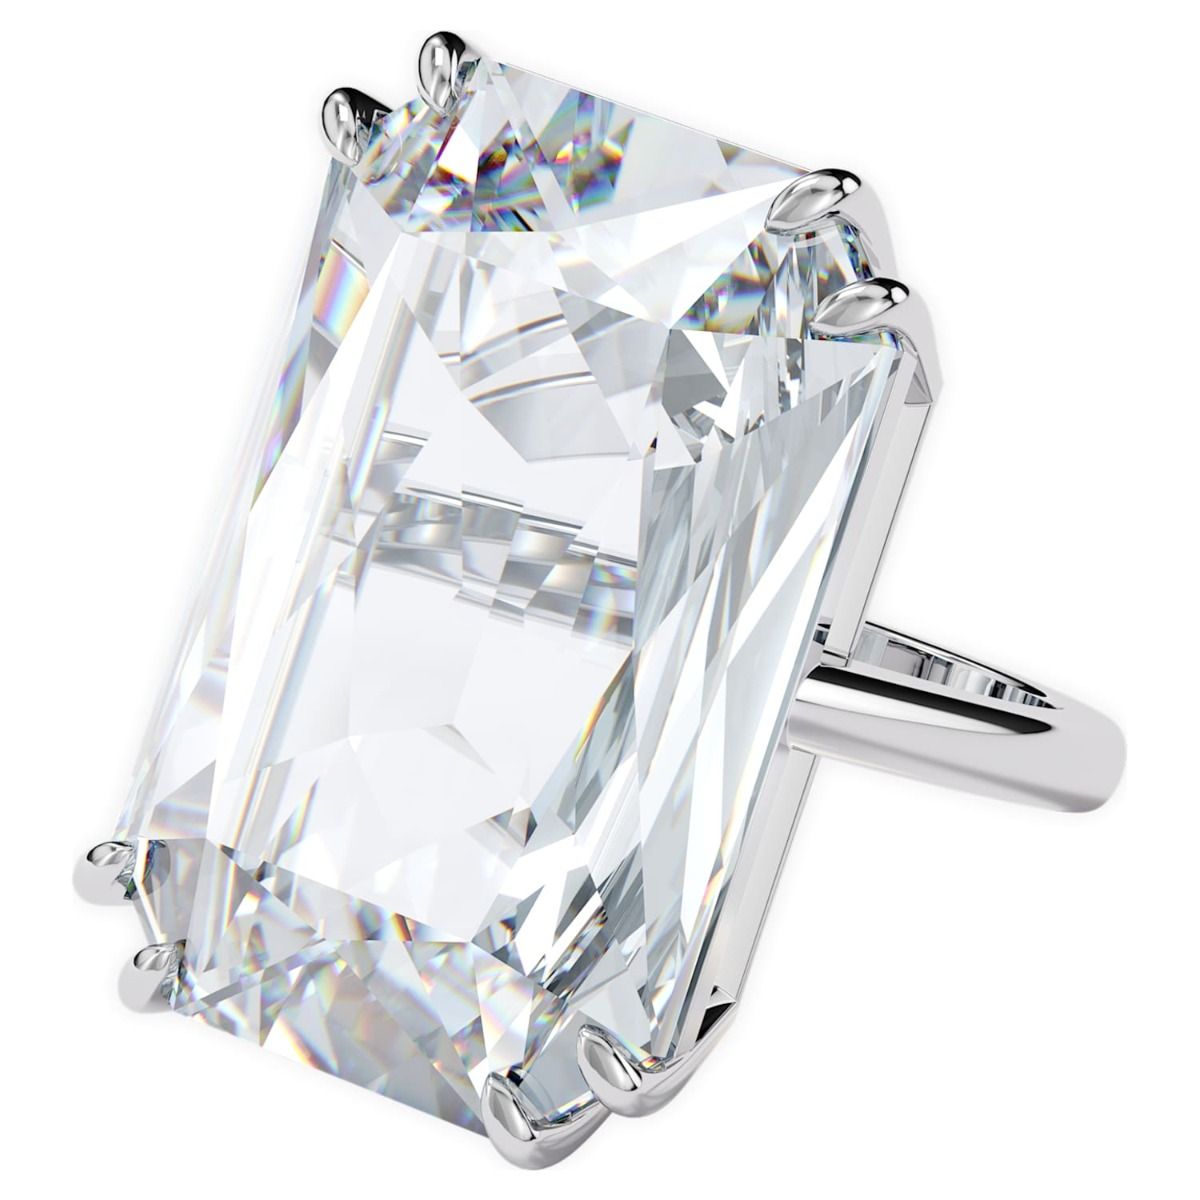 Swarovski White & AquaBlue Elegant Crystal Open Rings Women Jewelry